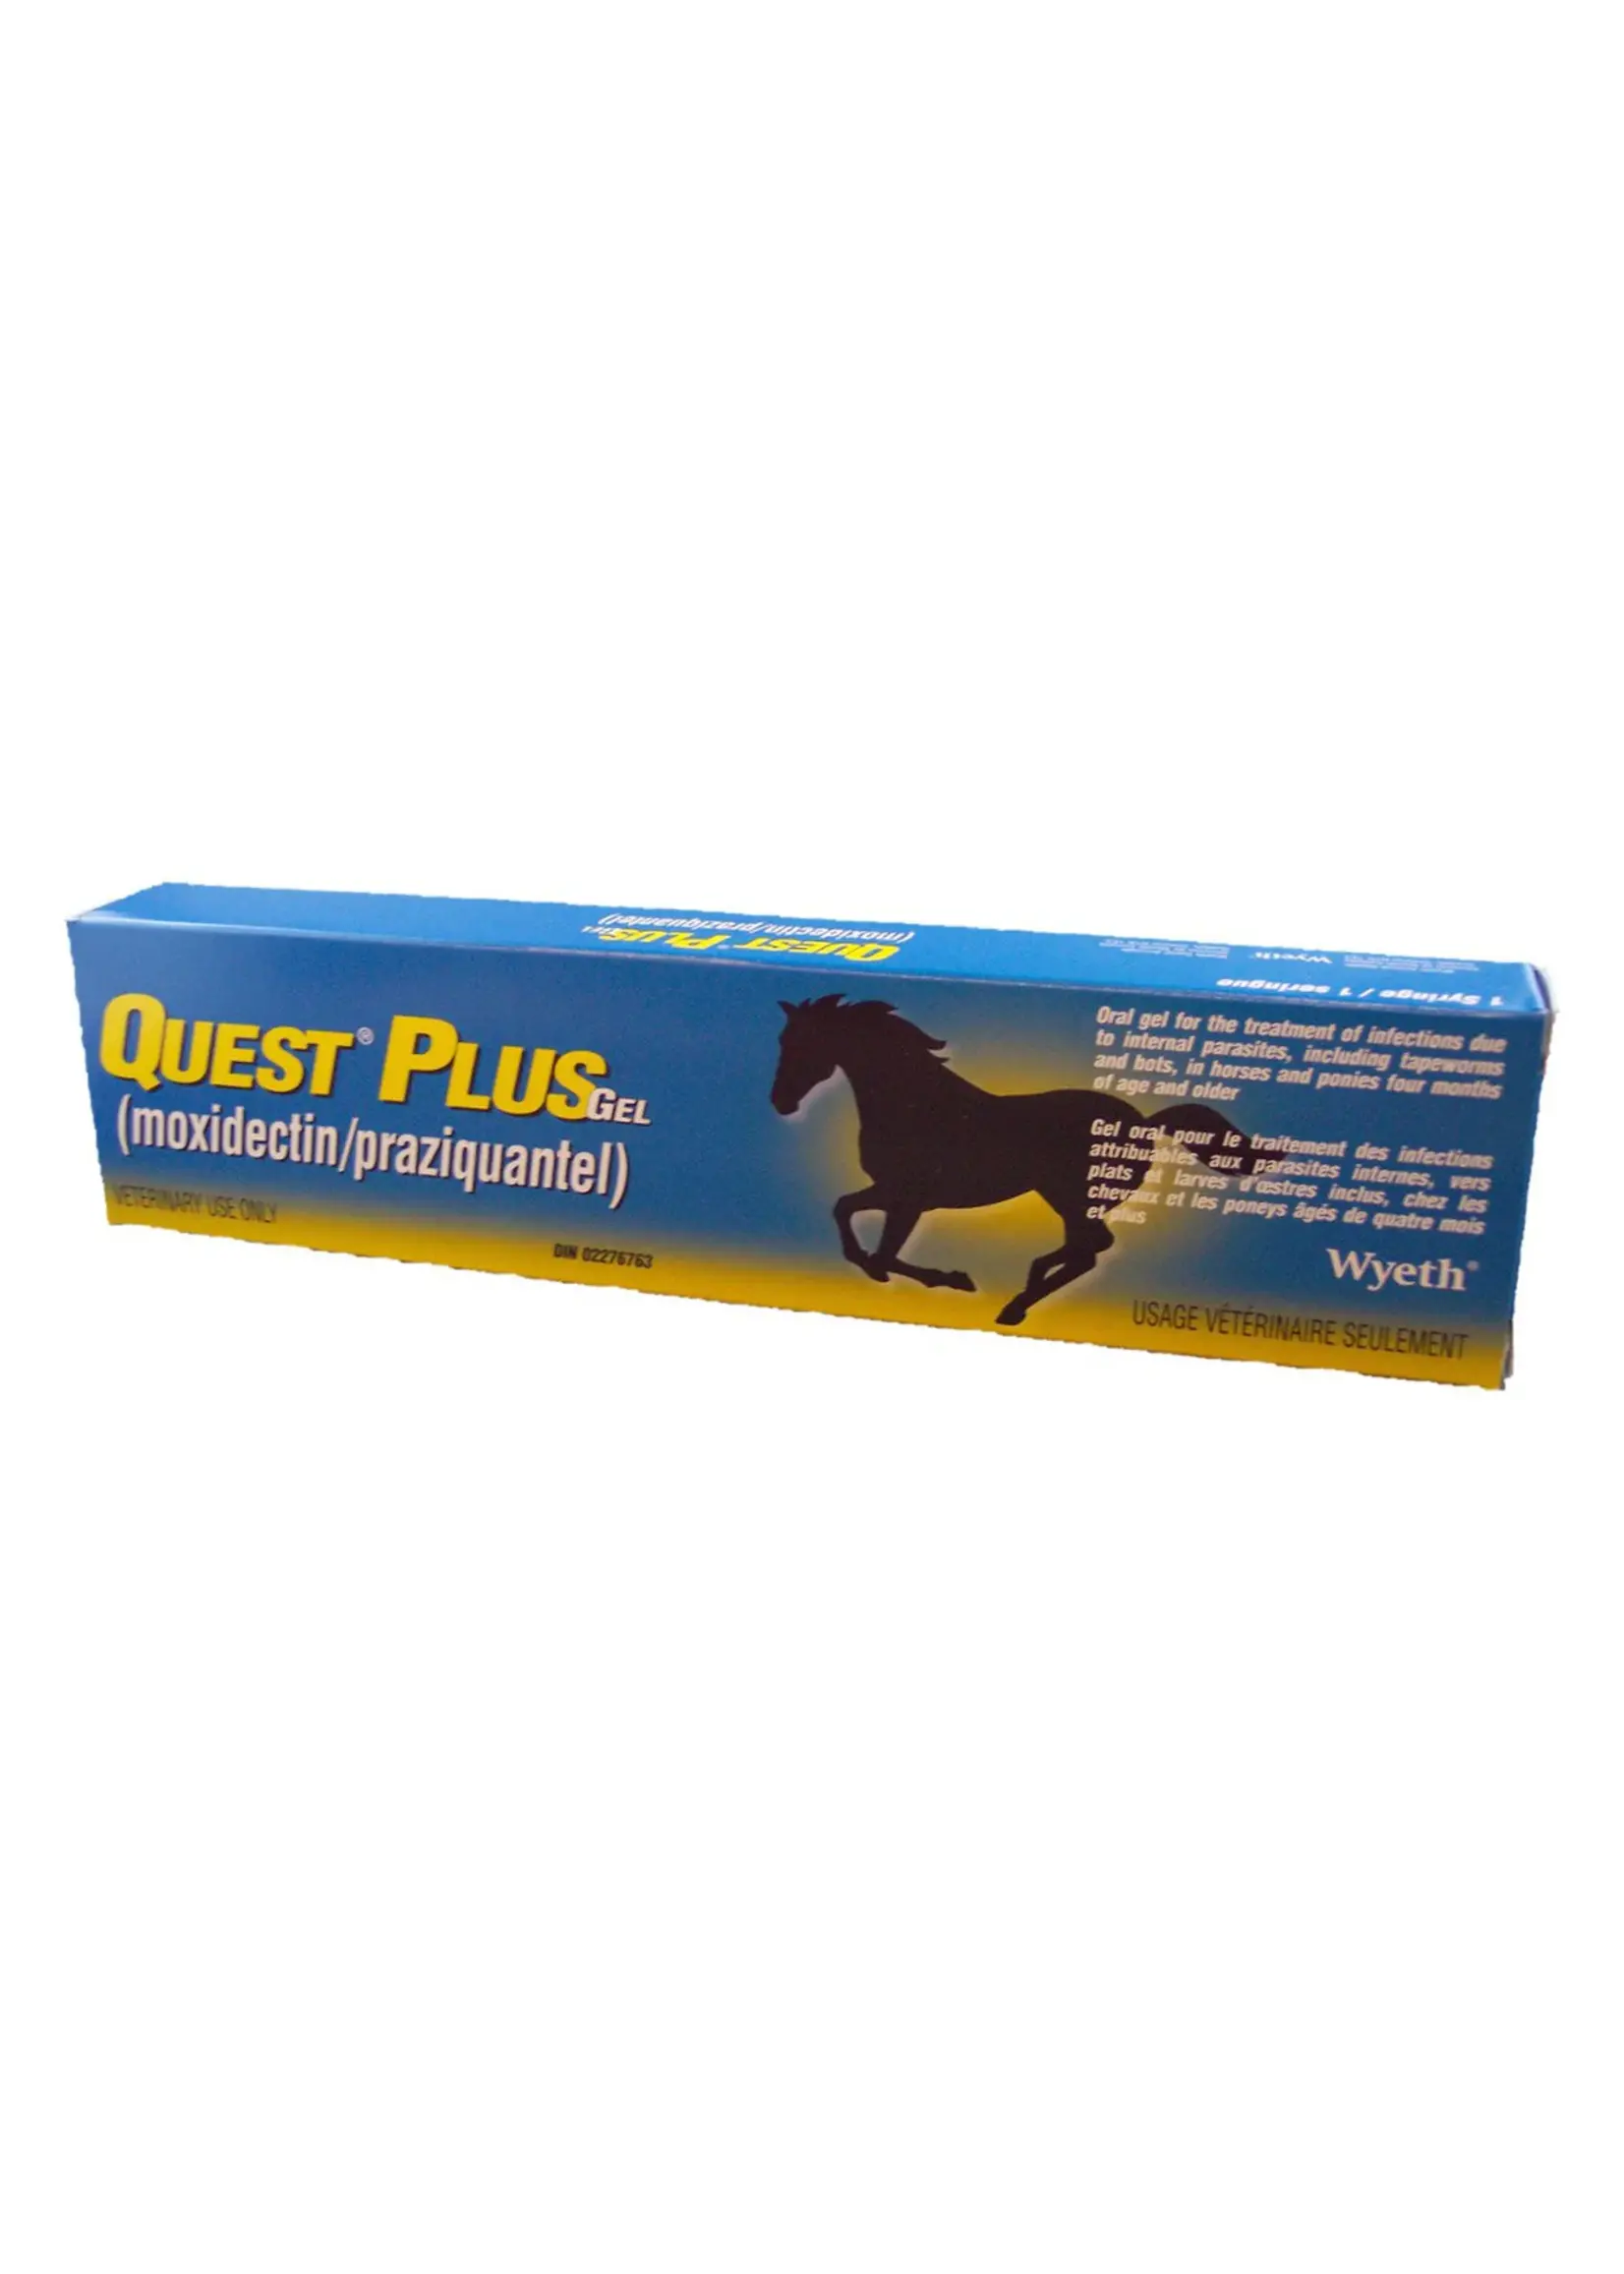 Quest Plus Dewormer - ZOETIS Quest Plus Gel